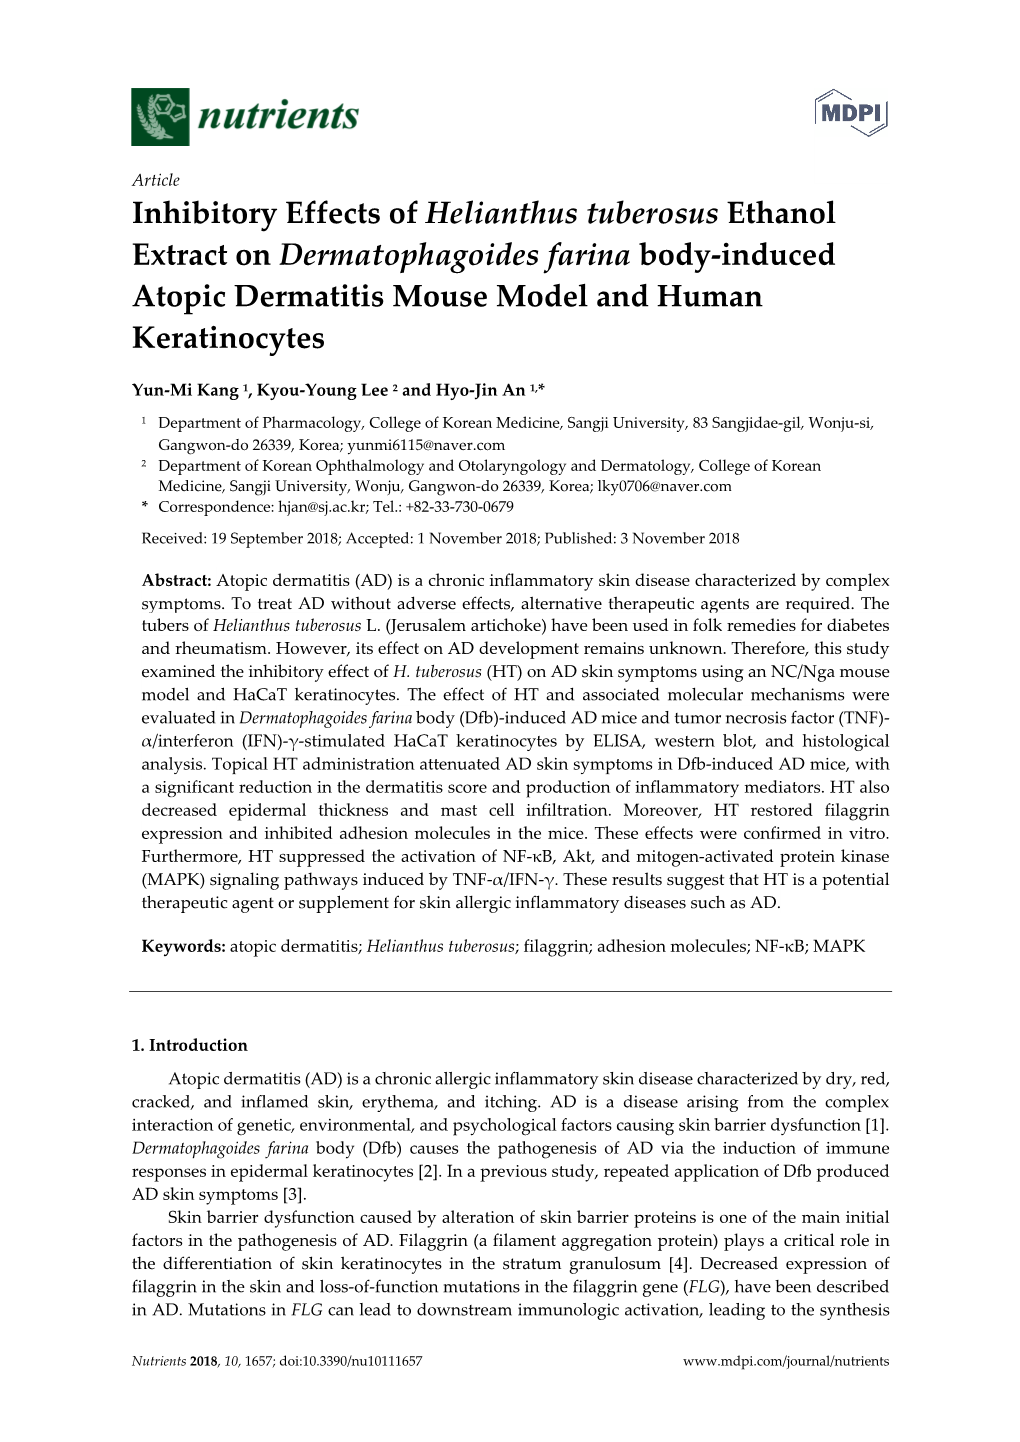 Inhibitory Effects of Helianthus Tuberosus Ethanol Extract on Dermatophagoides Farina Body-Induced Atopic Dermatitis Mouse Model and Human Keratinocytes